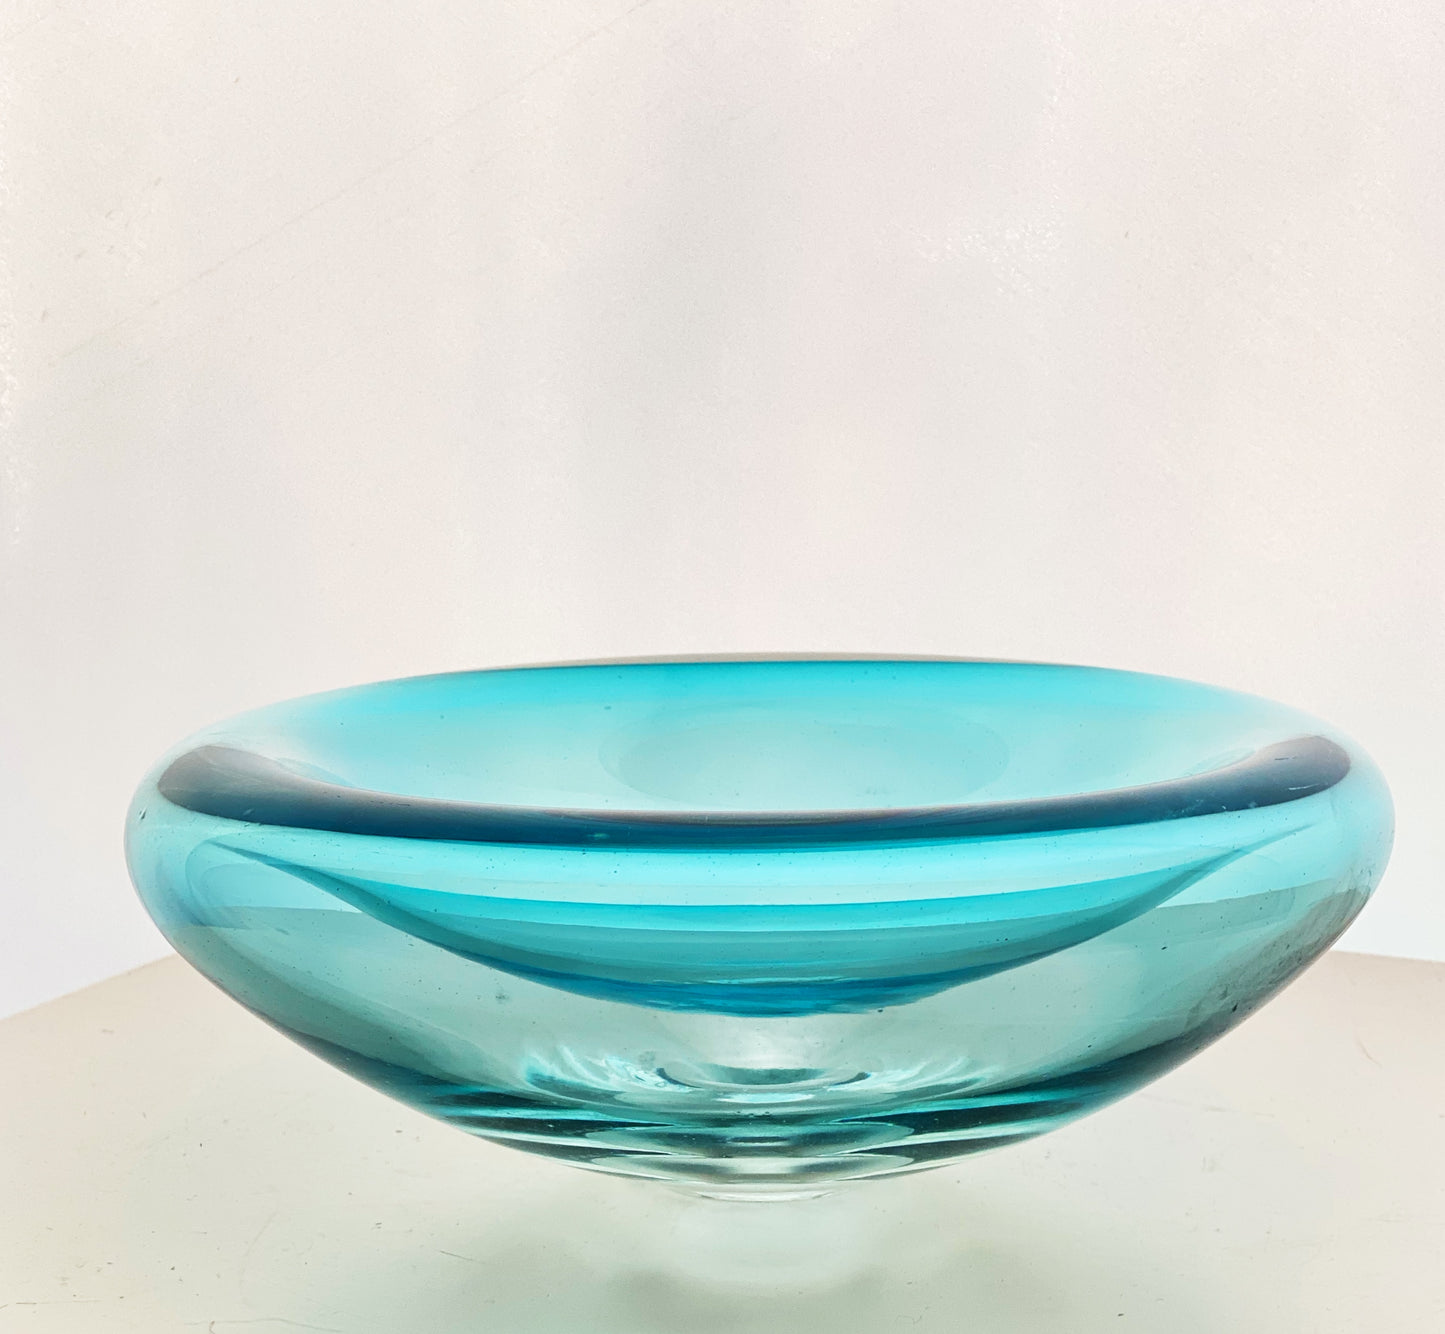 Bowl by Contemporary Irish Designer Artist Lucinda Robertson